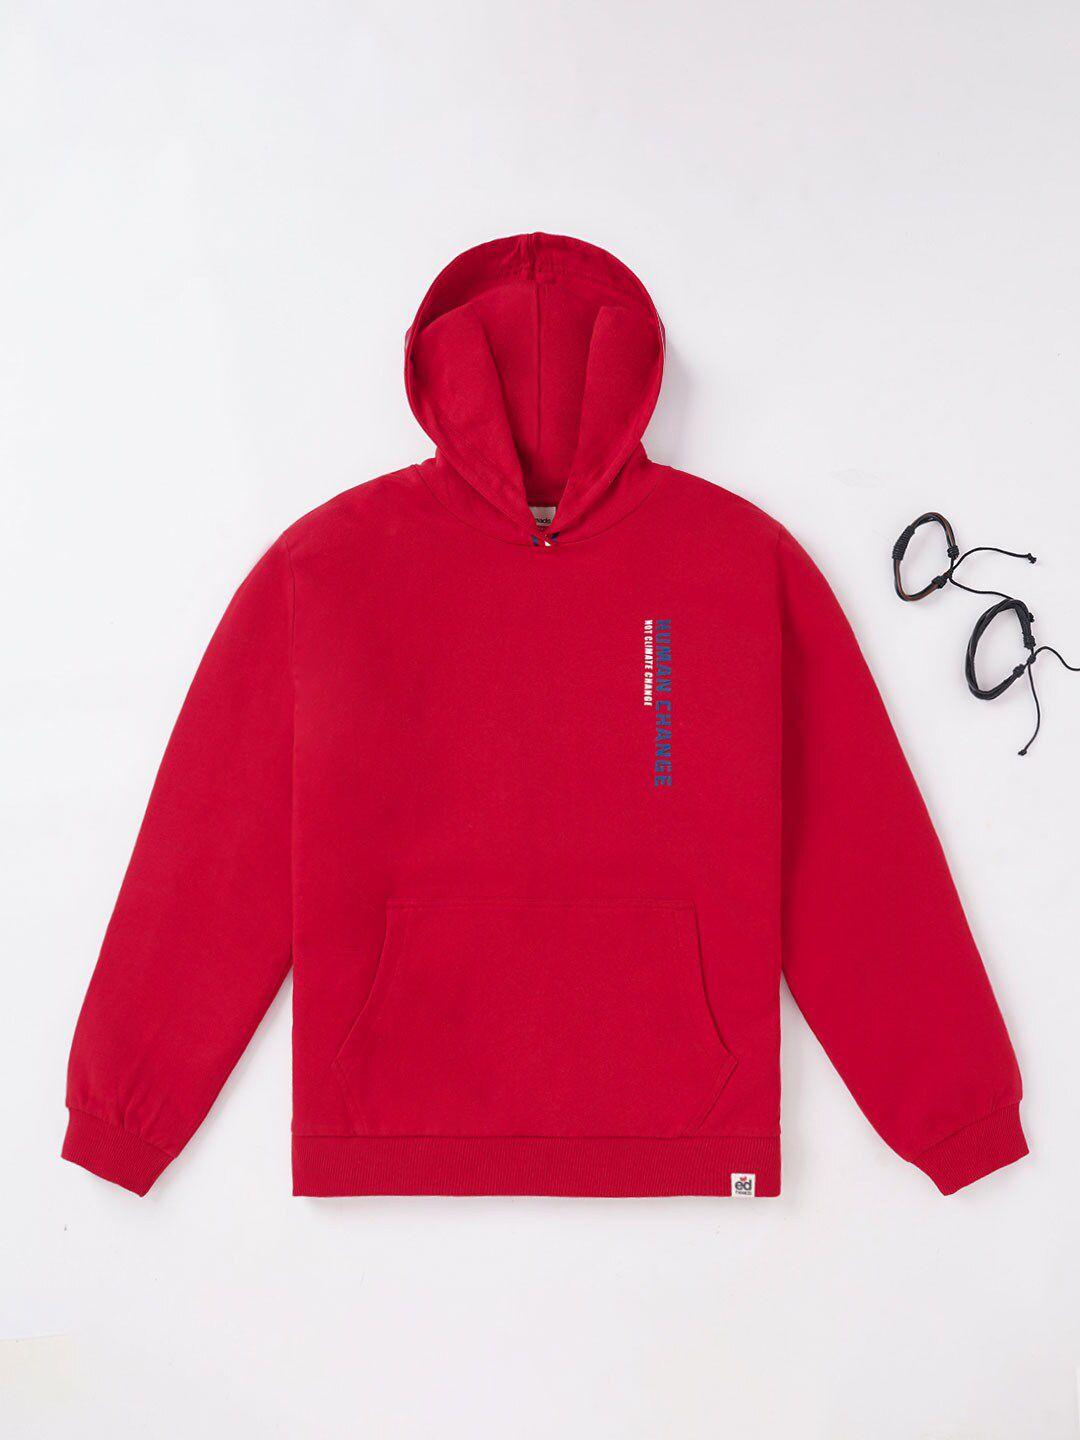 edheads boys red hooded cotton sweatshirt